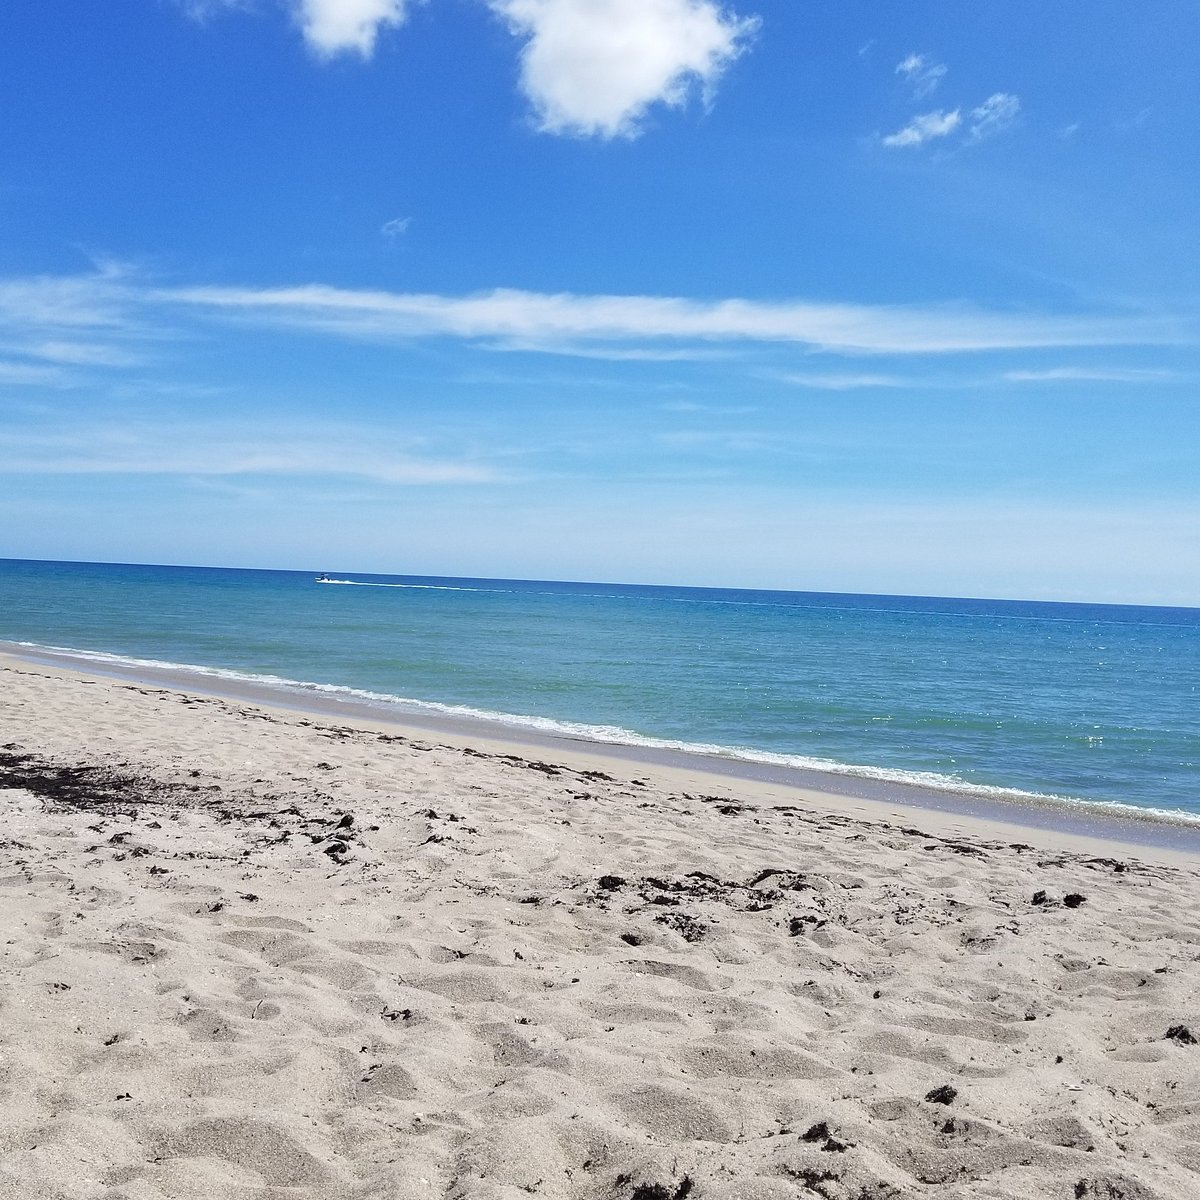 daniel mckinnon recommends High Island Nude Beach